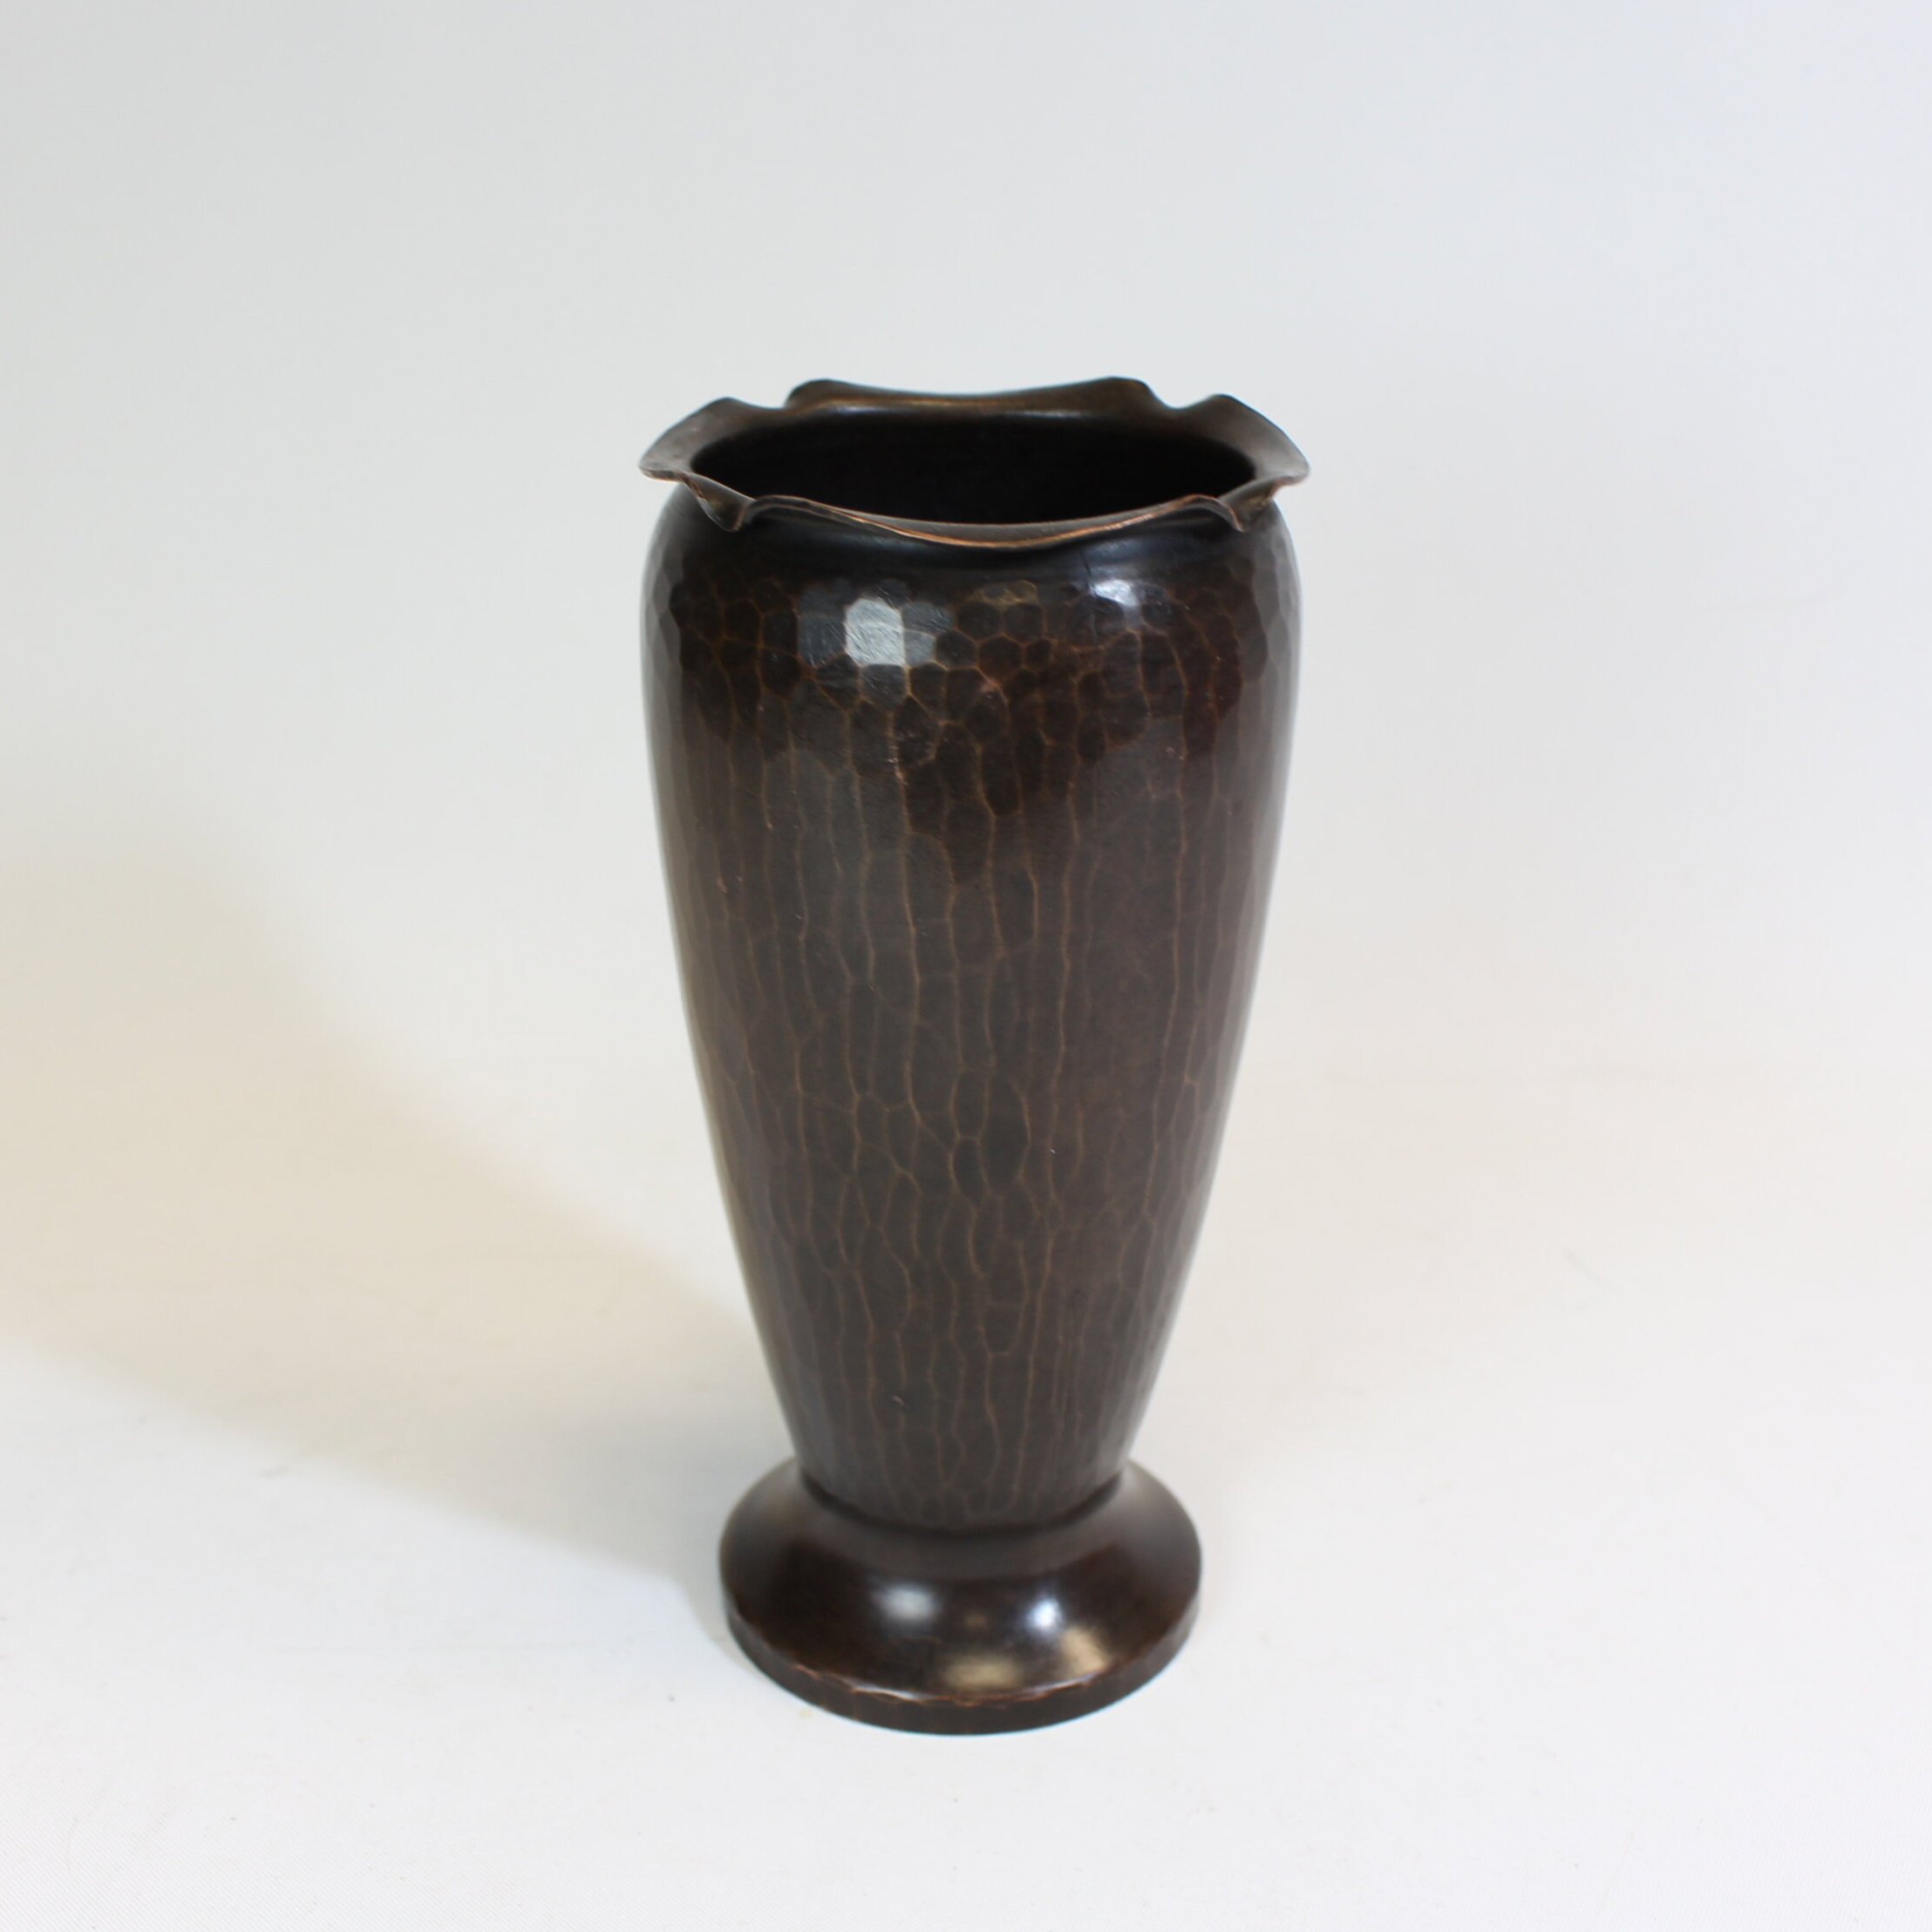 SOLD, Roycroft Curly Top Vase